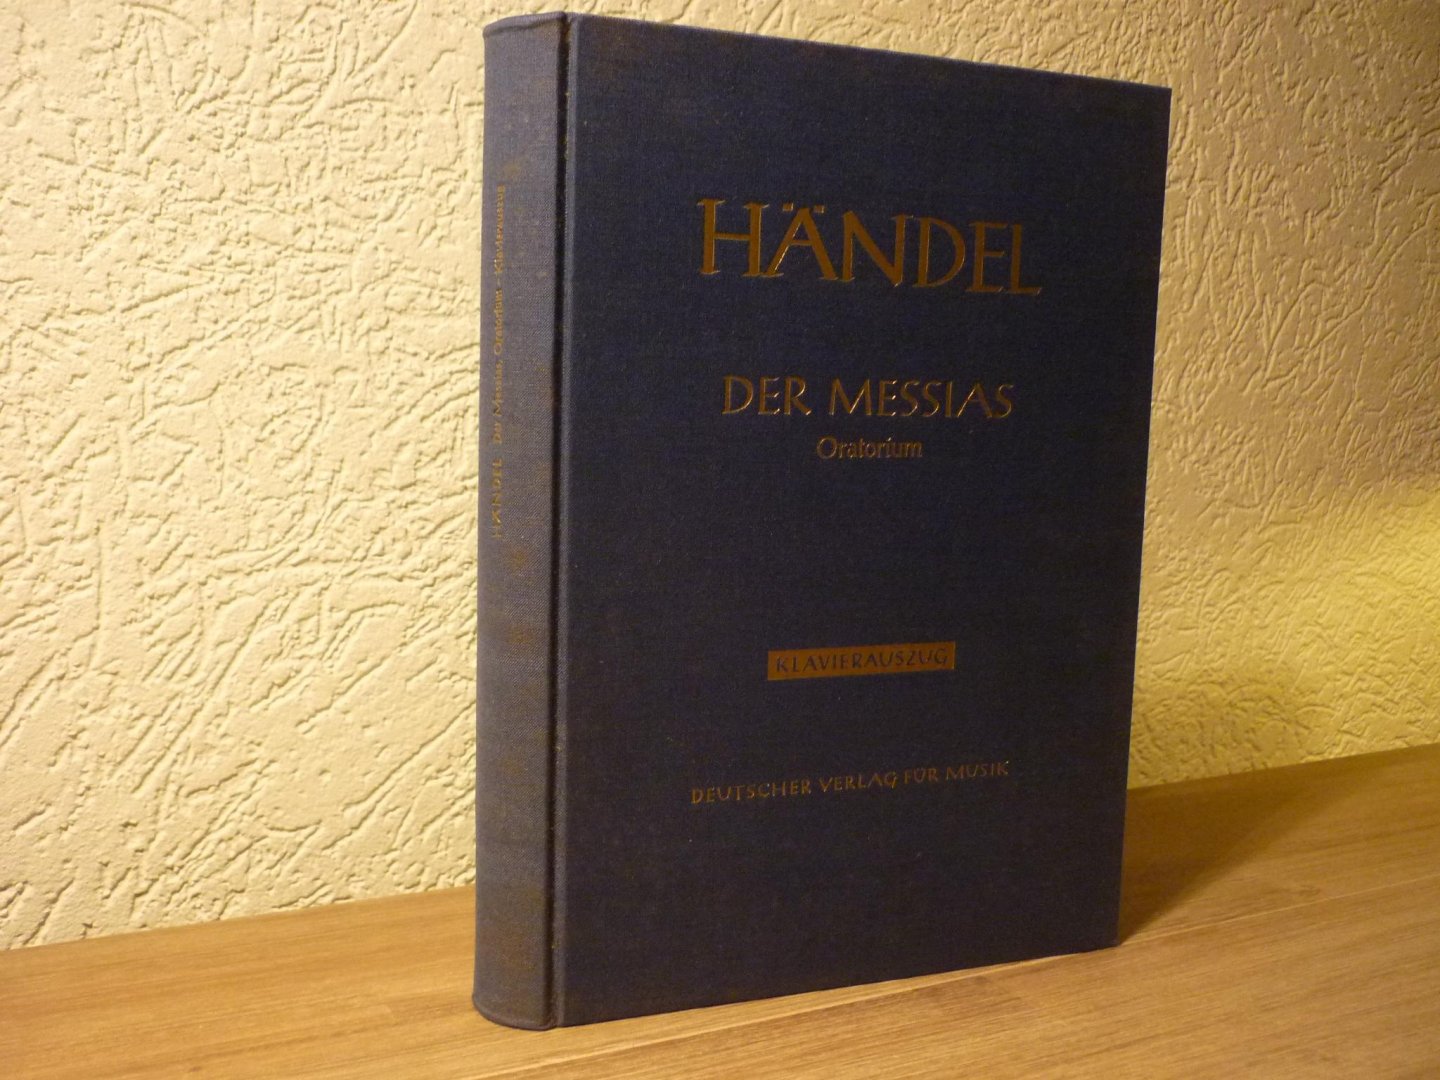 Händel; Georg Friedrich (1685–1759) - Messiah HWV 56 Oratorium in drei Teilen – Klavierauszug (Duits en Engels); voor Solisten (SAATB), gemengd koor (SSATB), orkest, basso continuo; Piano-uittreksel van Max Schneider